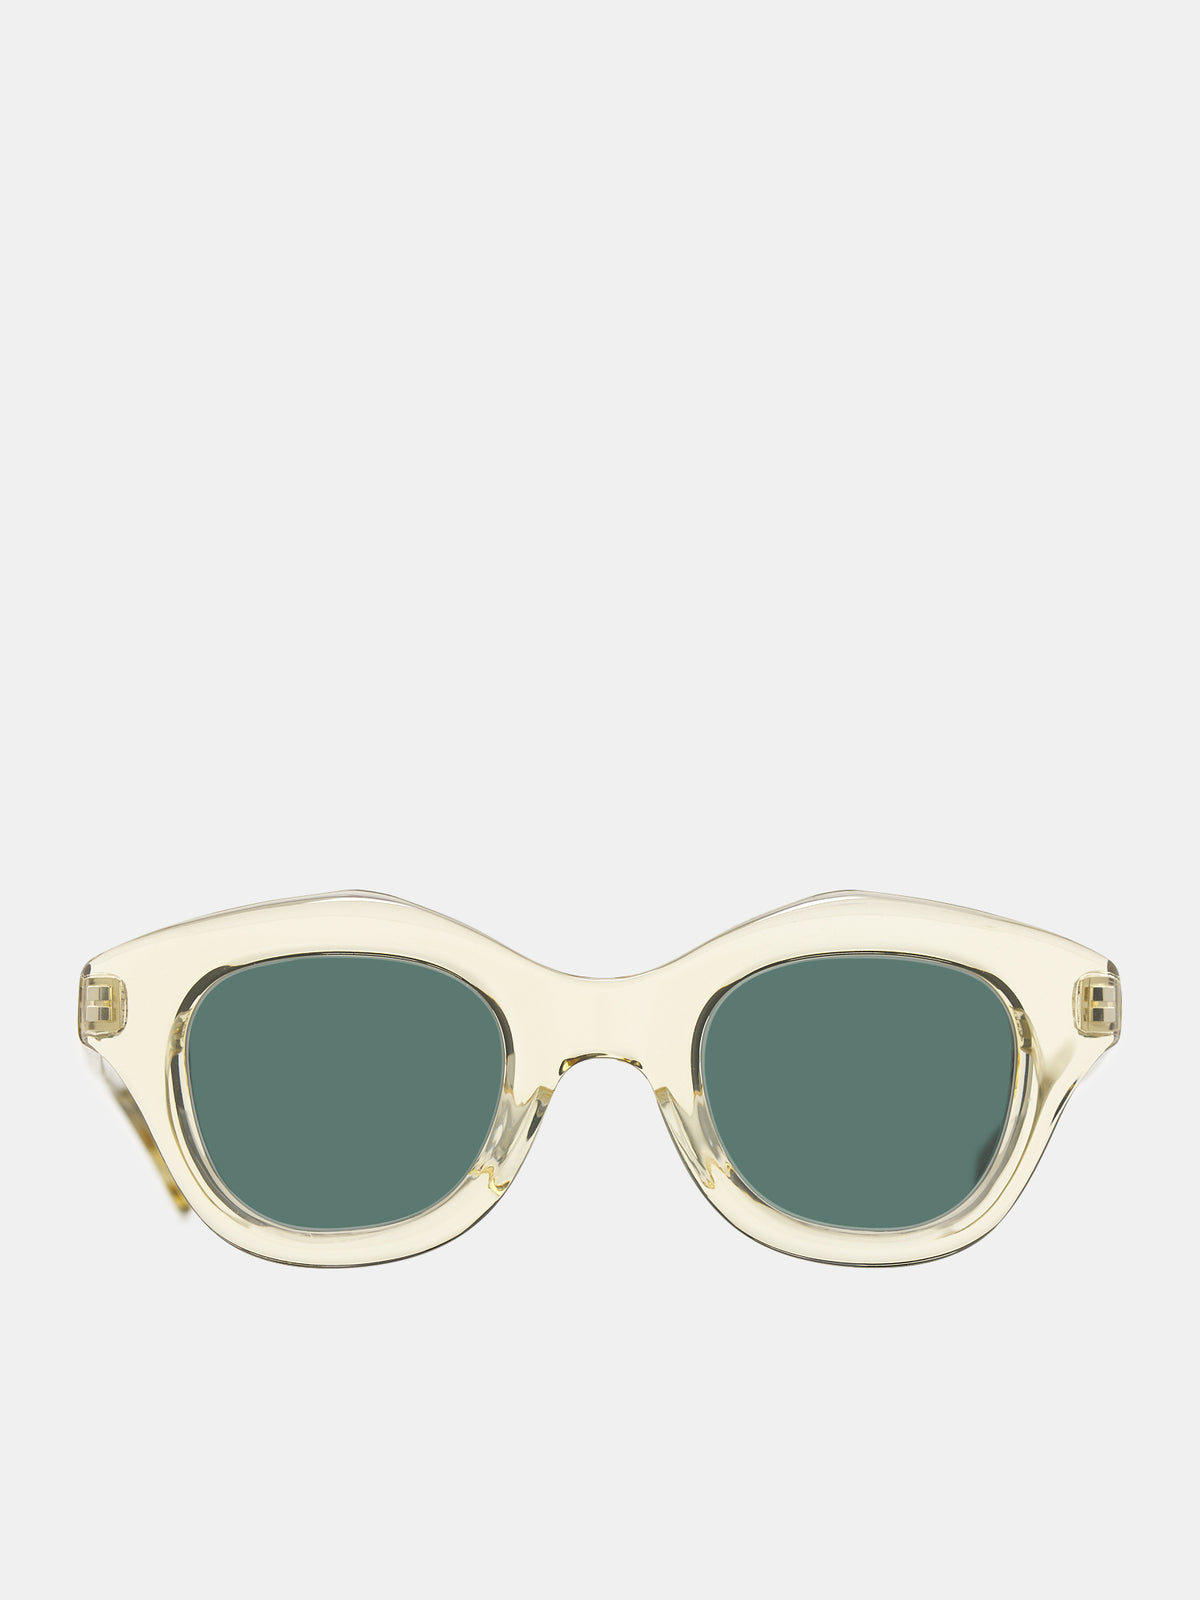 Hook Sunglasses (HOOK-CLEAR-GRAY4)